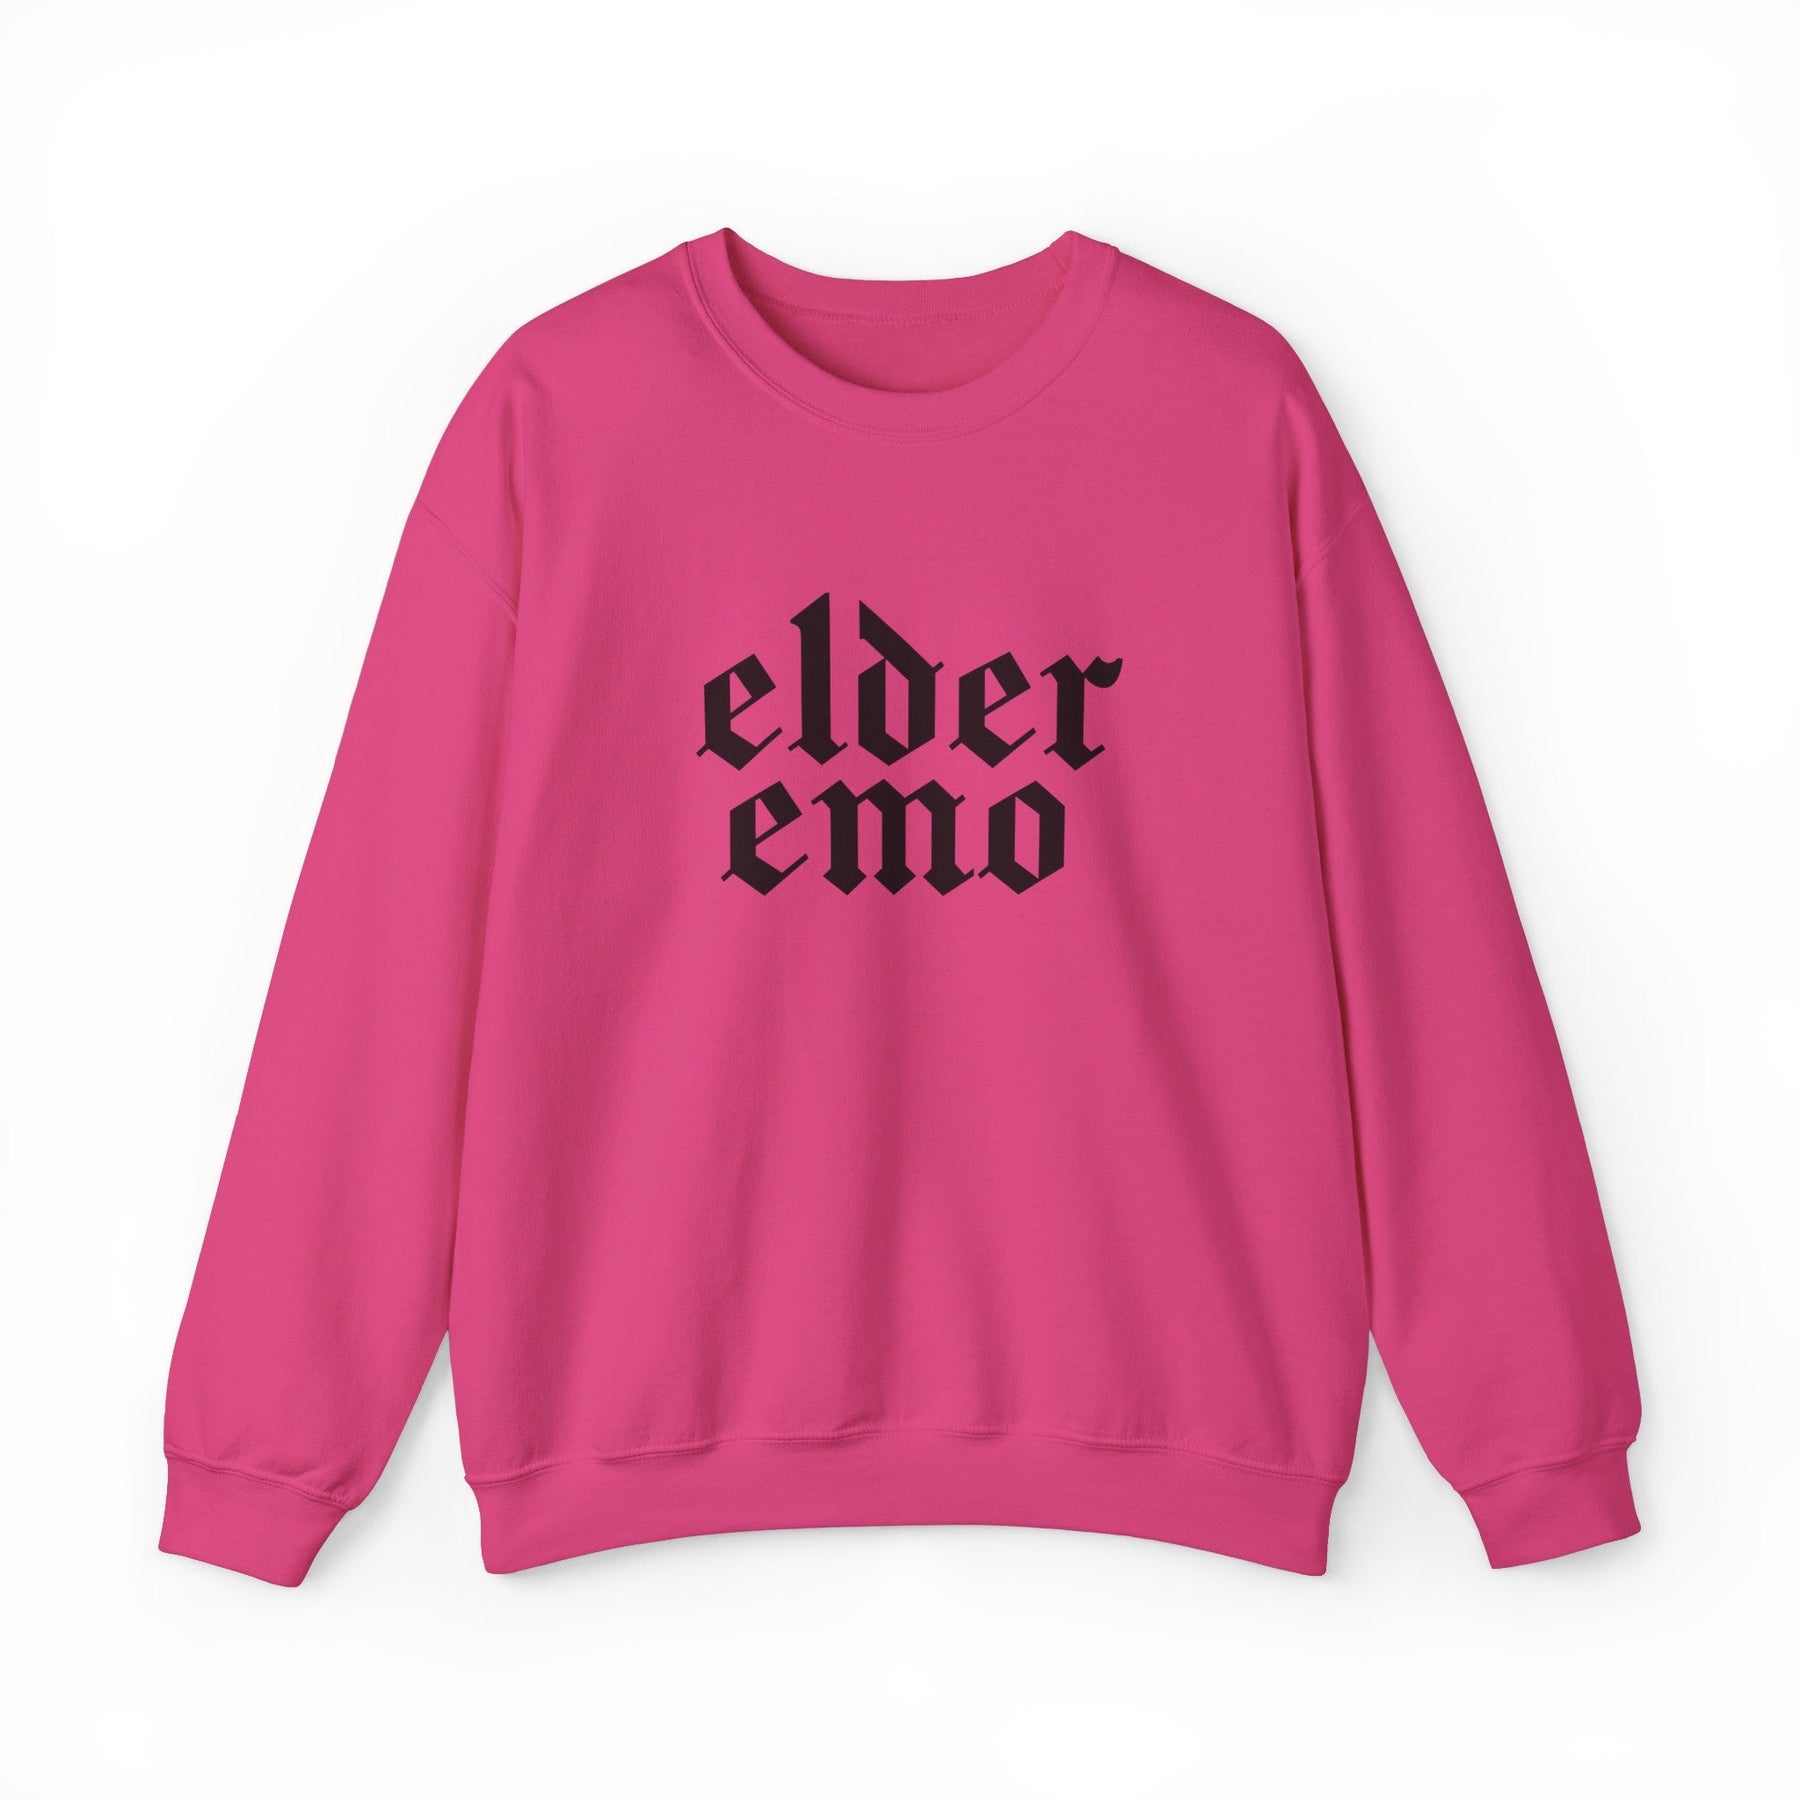 Elder Emo Gothic Font Crewneck Sweatshirt - Goth Cloth Co.Sweatshirt19919938128299425943